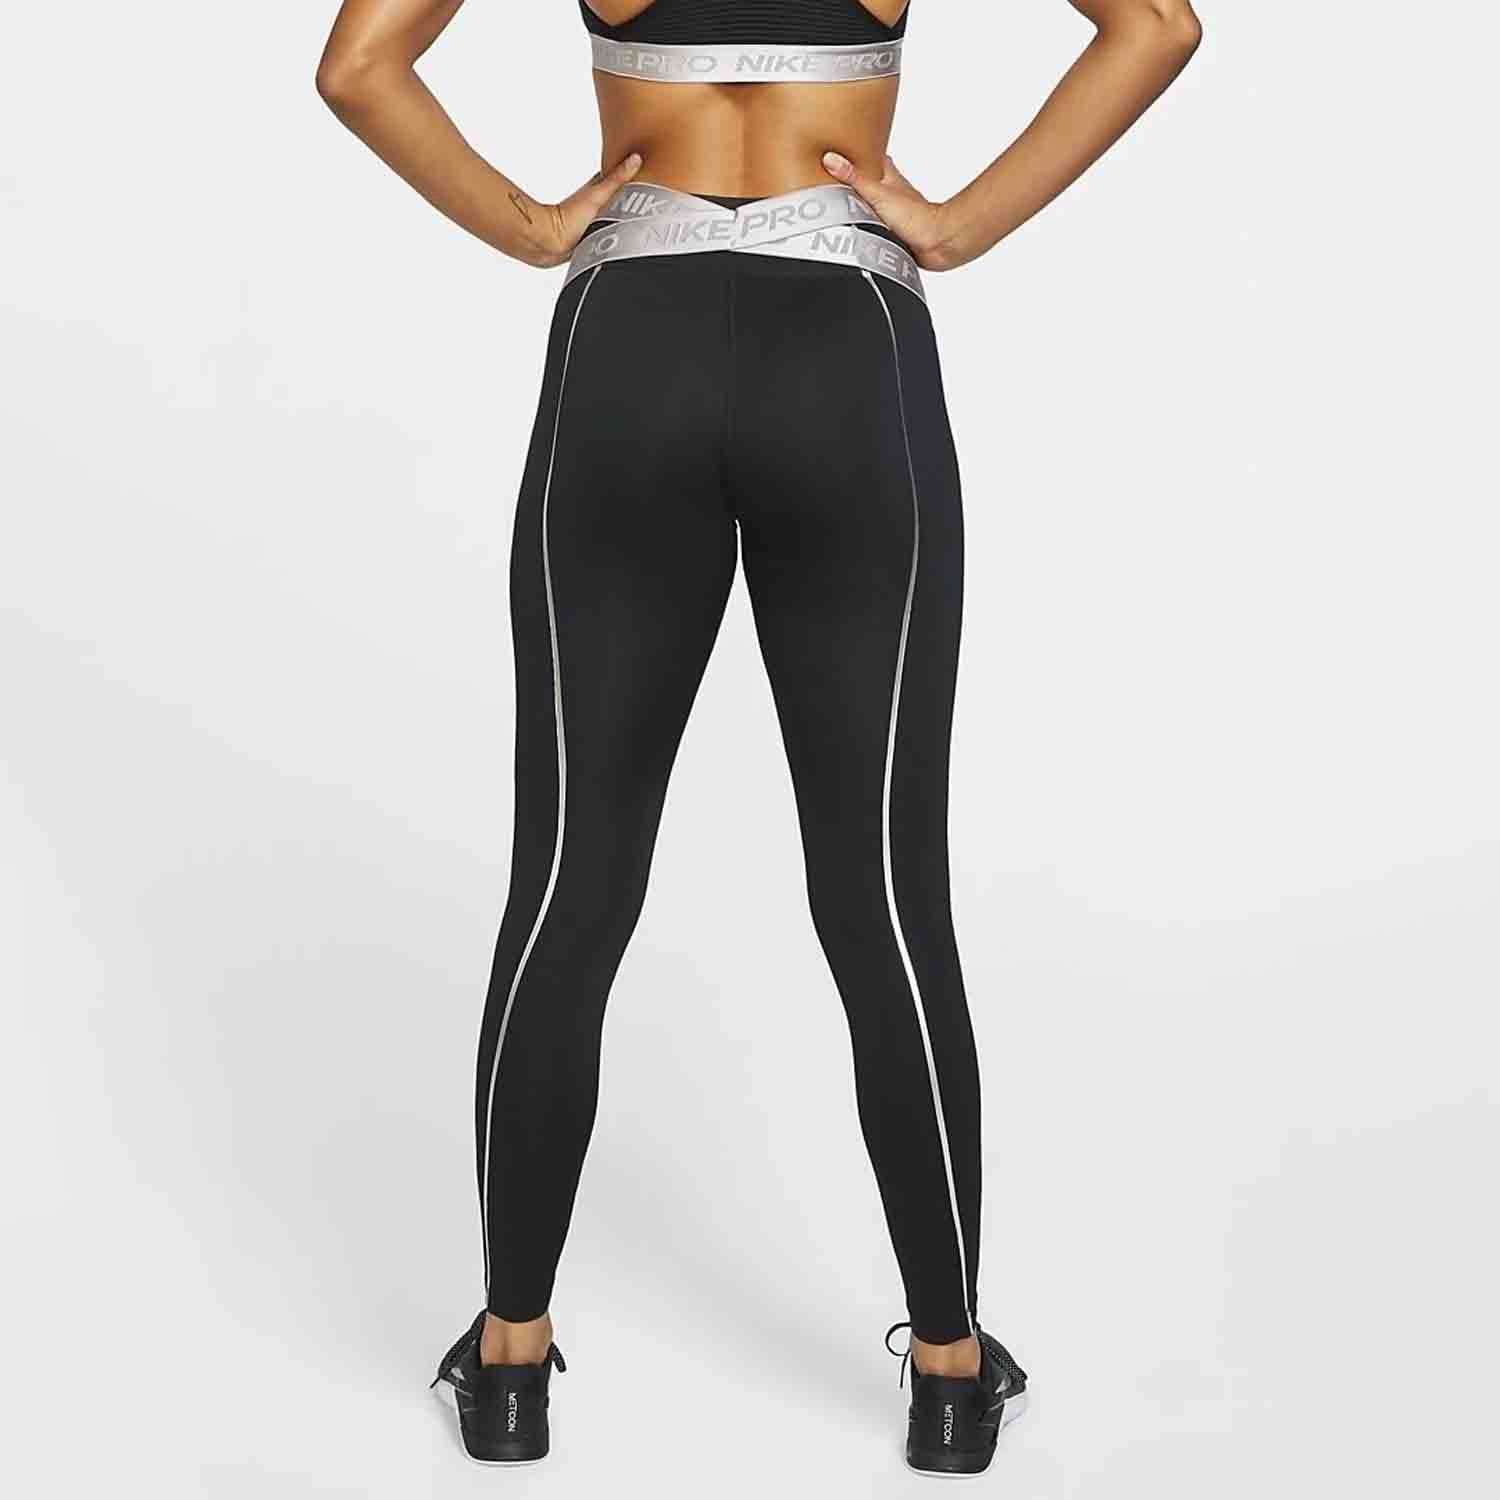 Nike pro warm starry night leggings XS Women's Black and silver/thunder gray